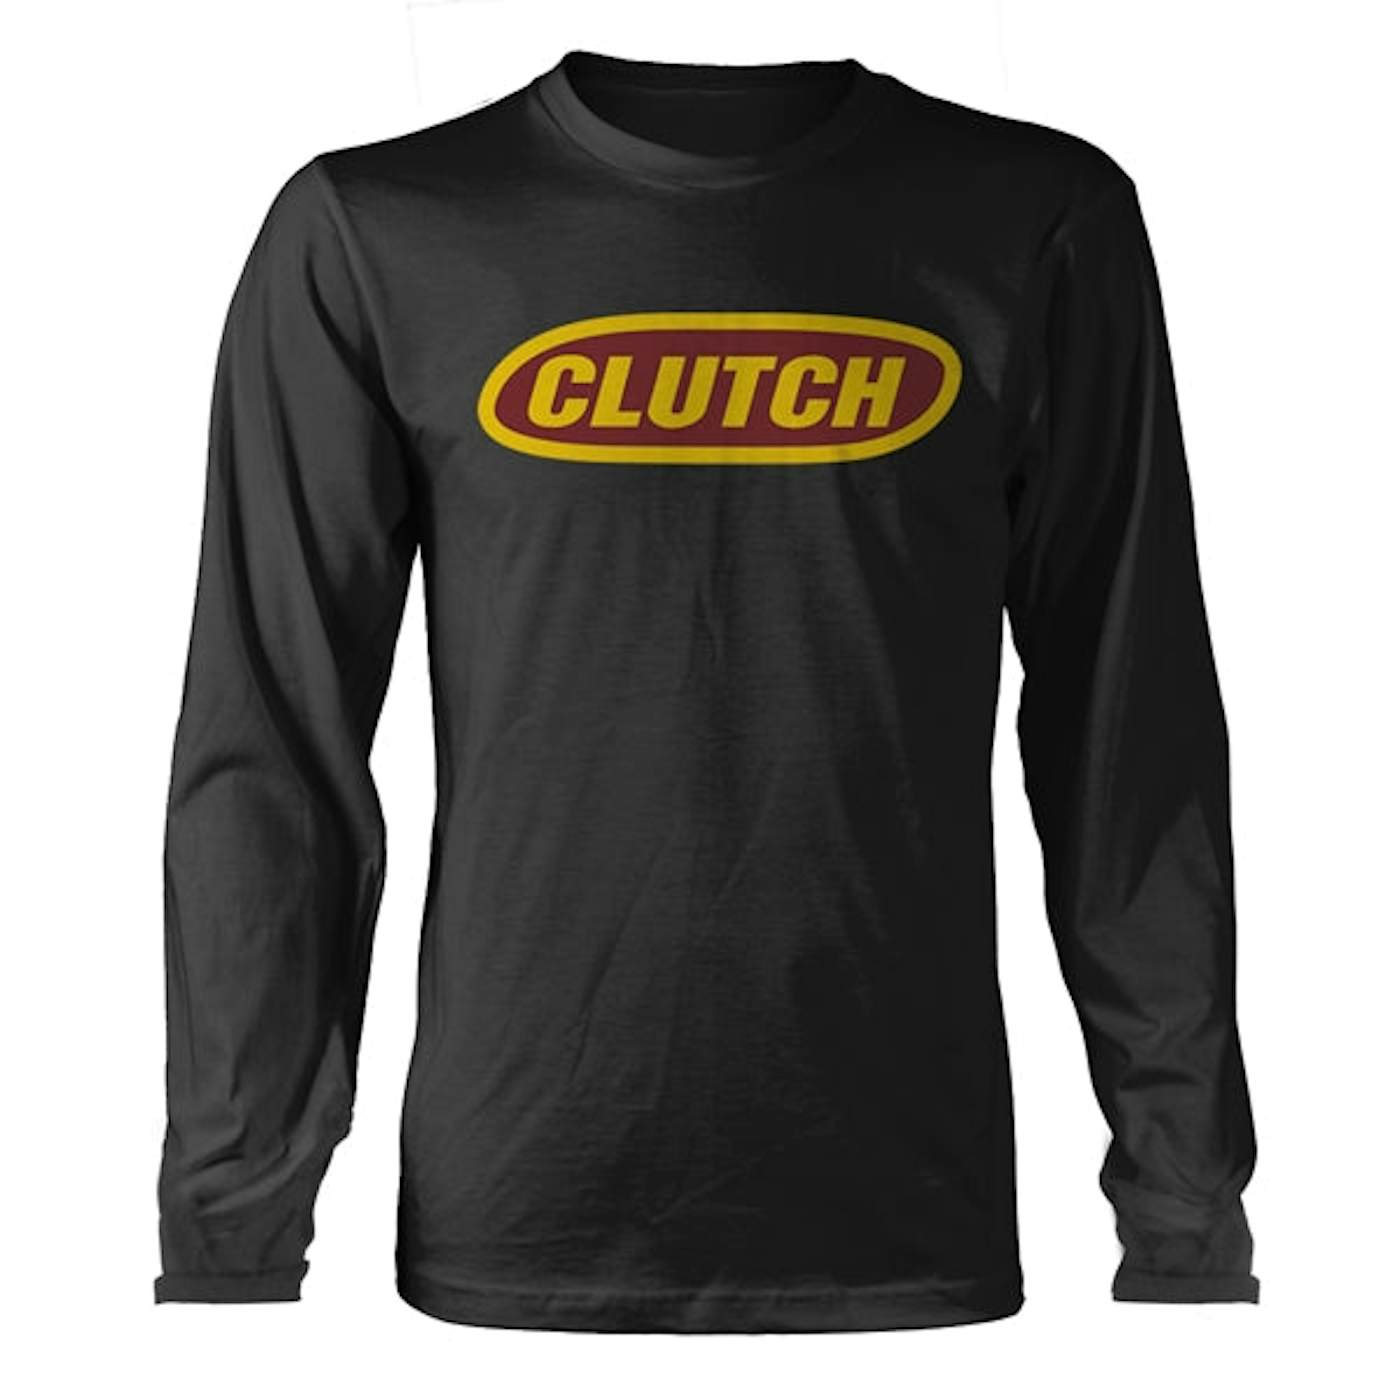 Clutch Long Sleeve T Shirt - Classic Logo